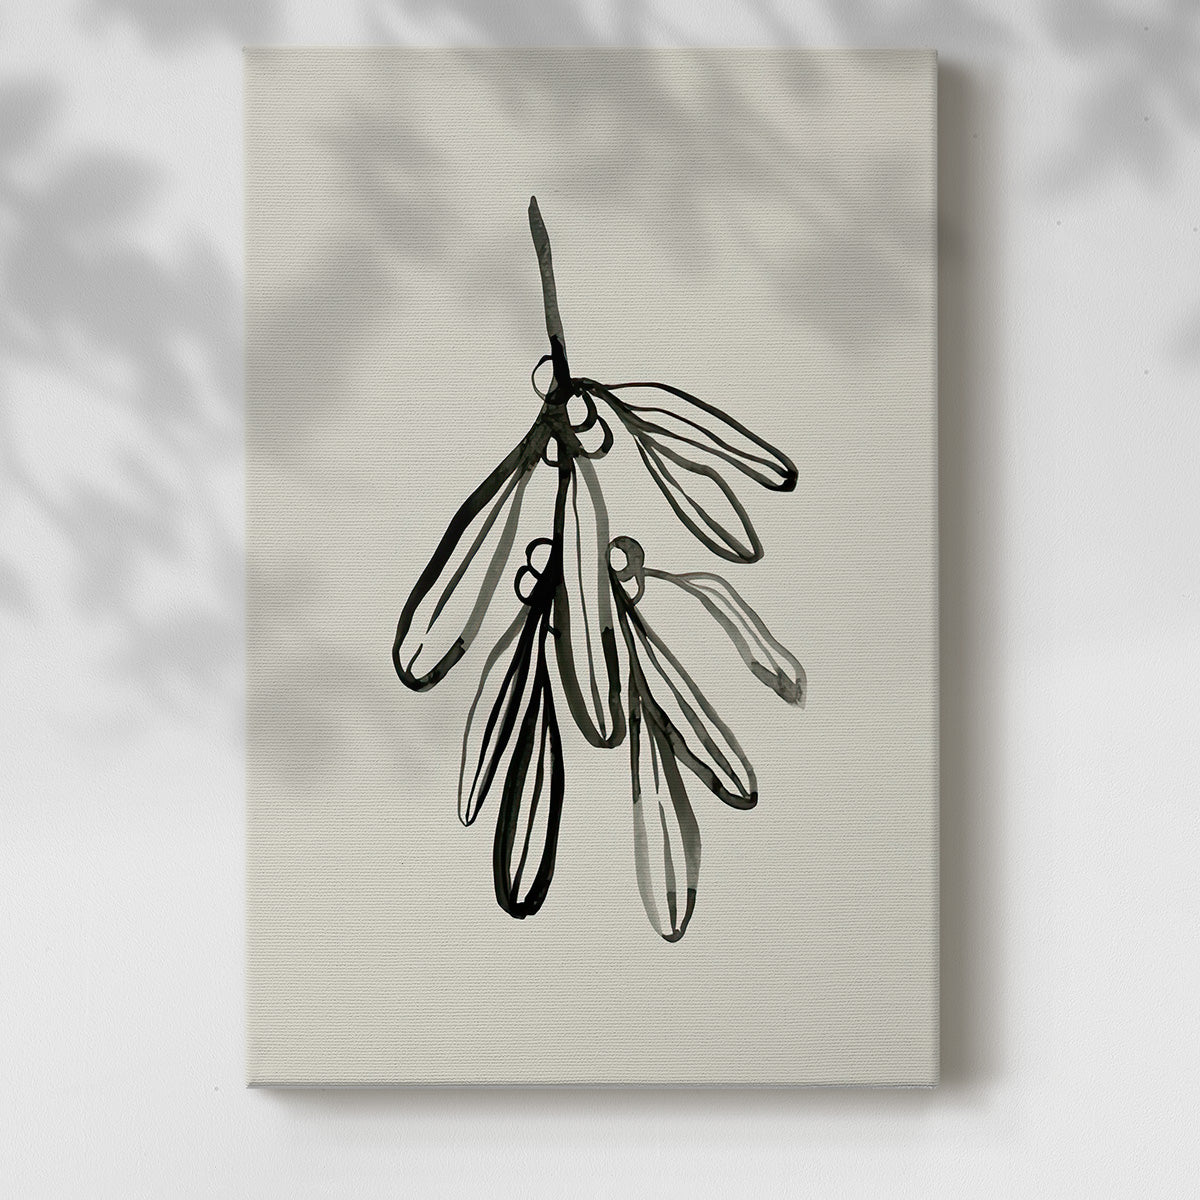 Mistletoe Sketch I - Gallery Wrapped Canvas